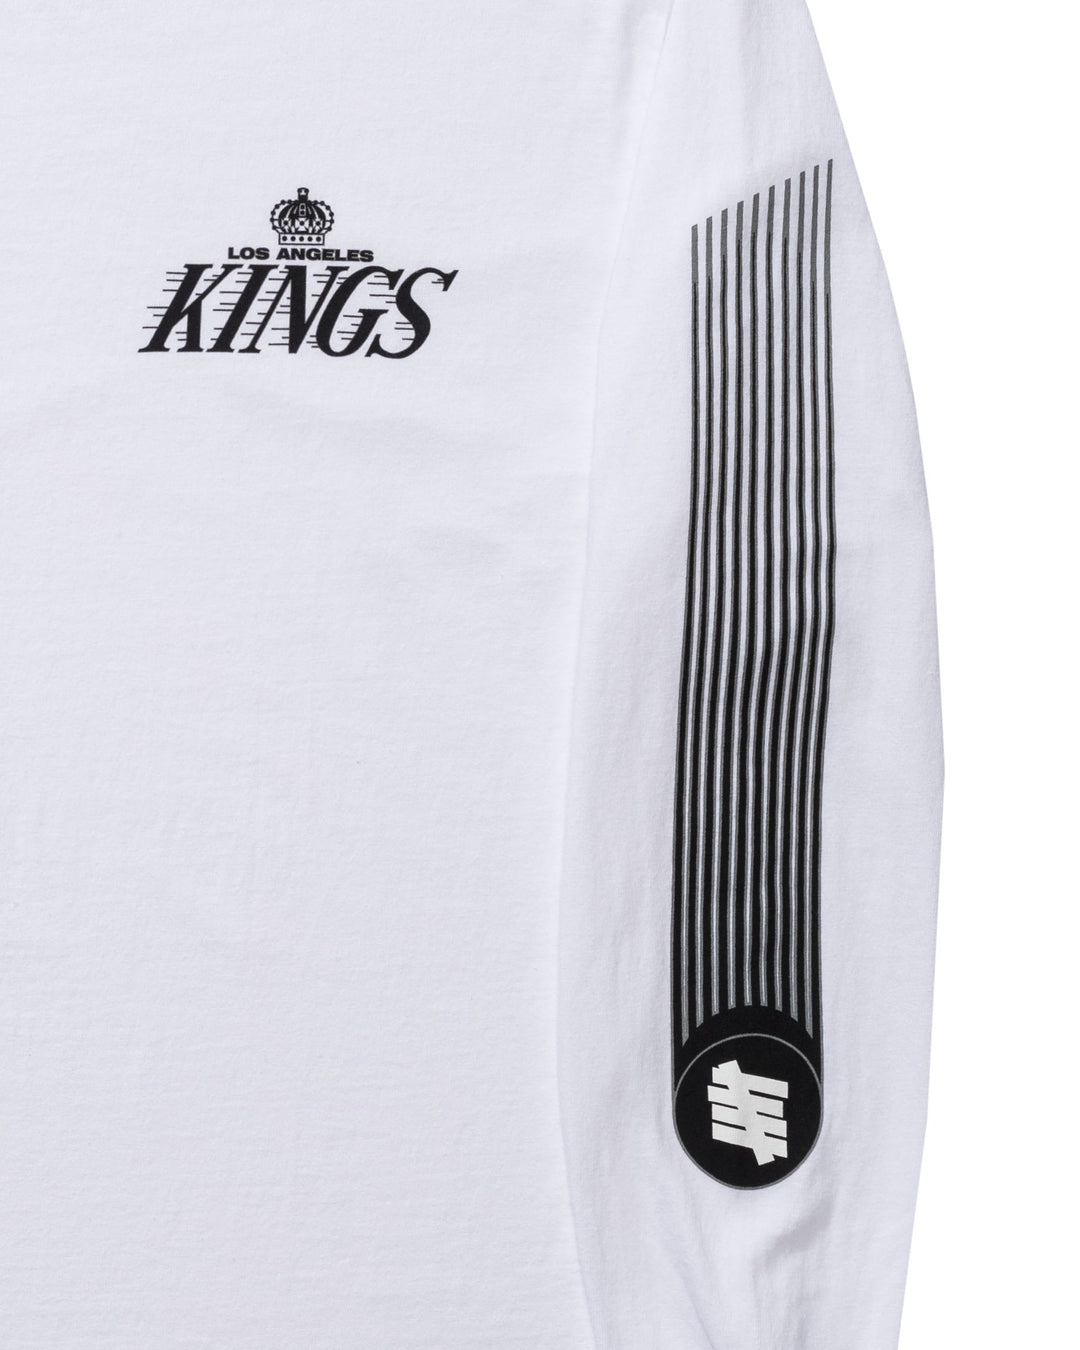 LA Kings White Hot Chevy Logo Short Sleeve Tee